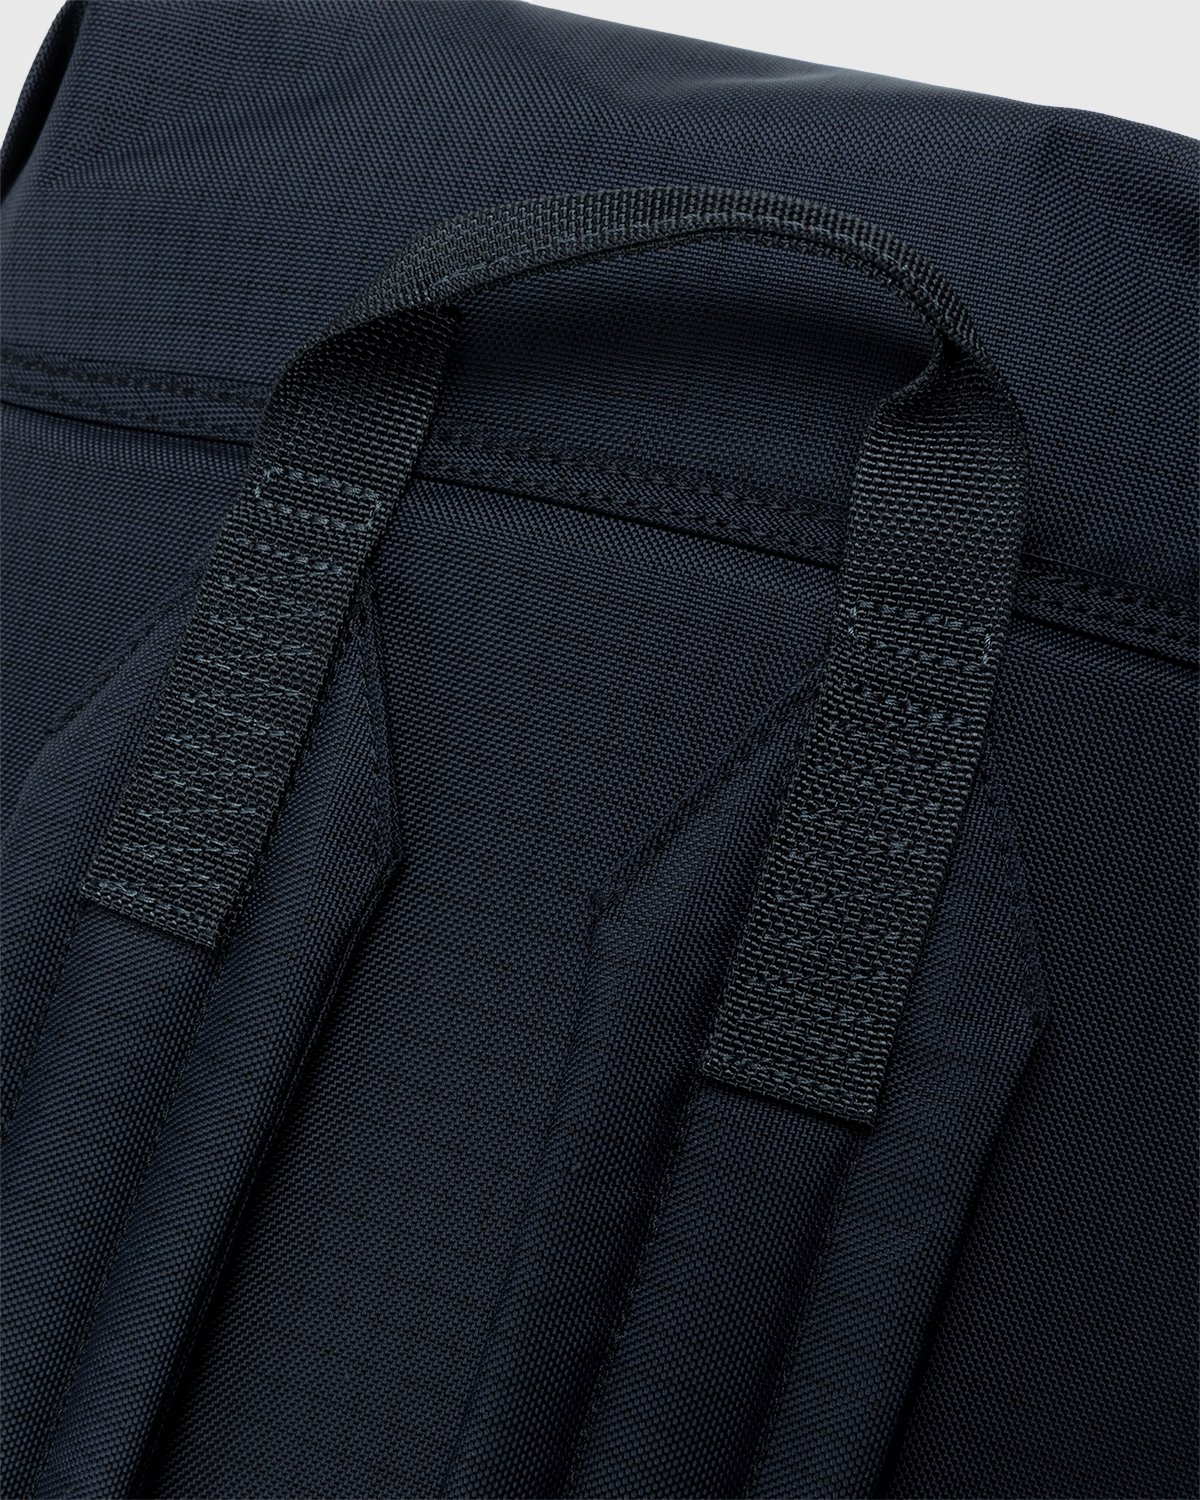 Acne Studios - Ripstop Nylon Backpack Black - Accessories - Black - Image 6